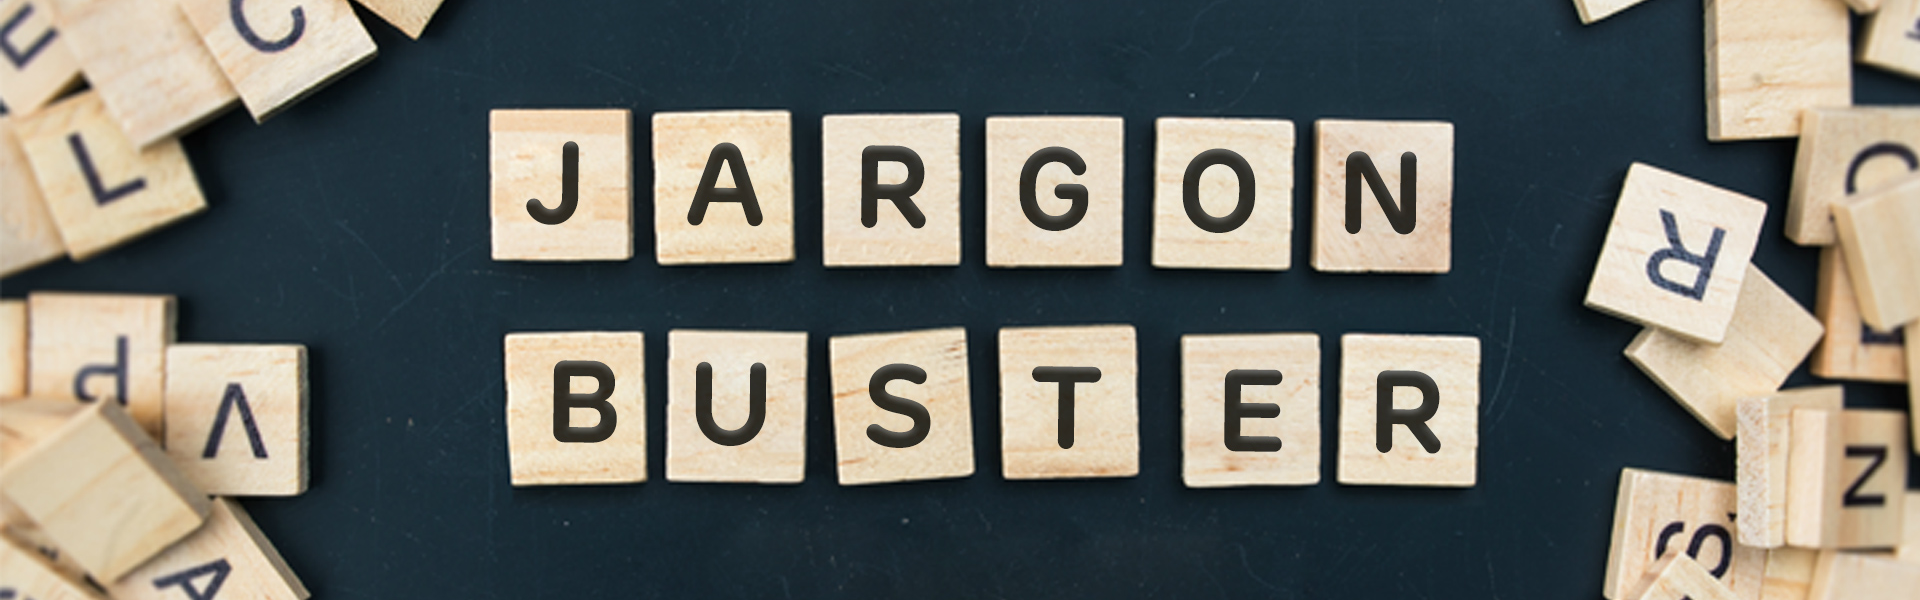 Jargon Buster Hero Image (Apple)